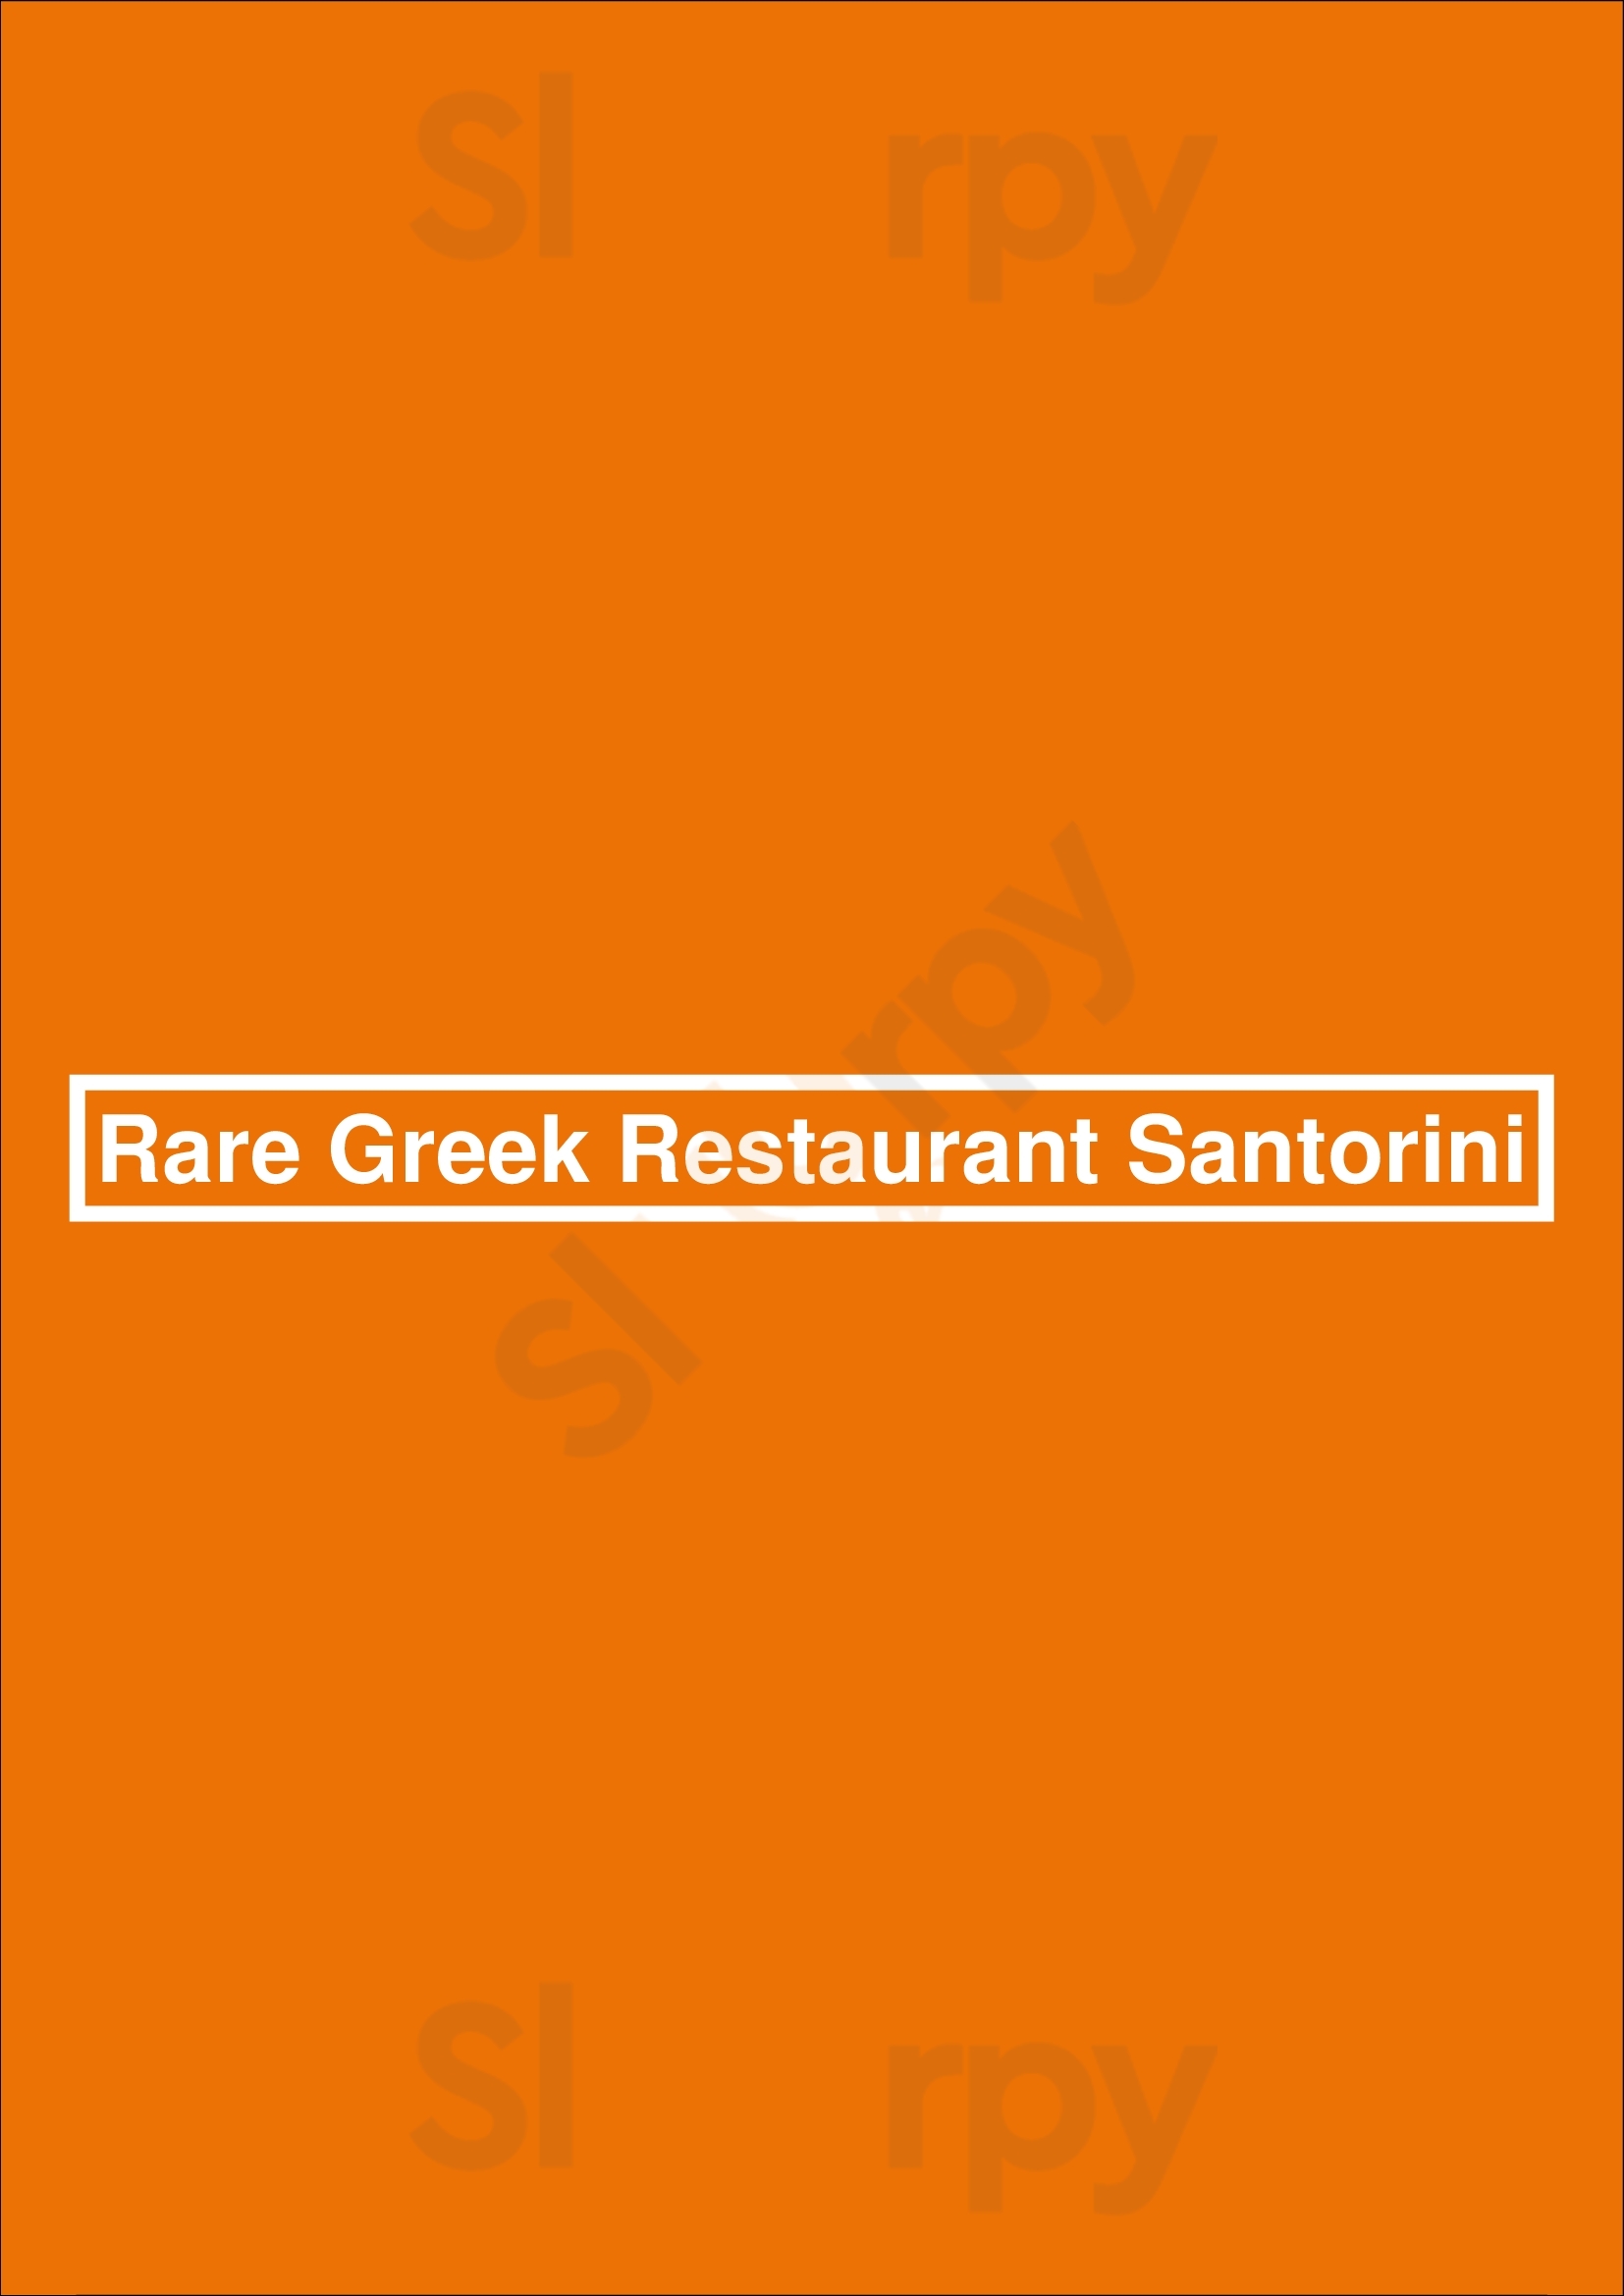 Rare Greek Restaurant Santorini Ημεροβίγλι Menu - 1